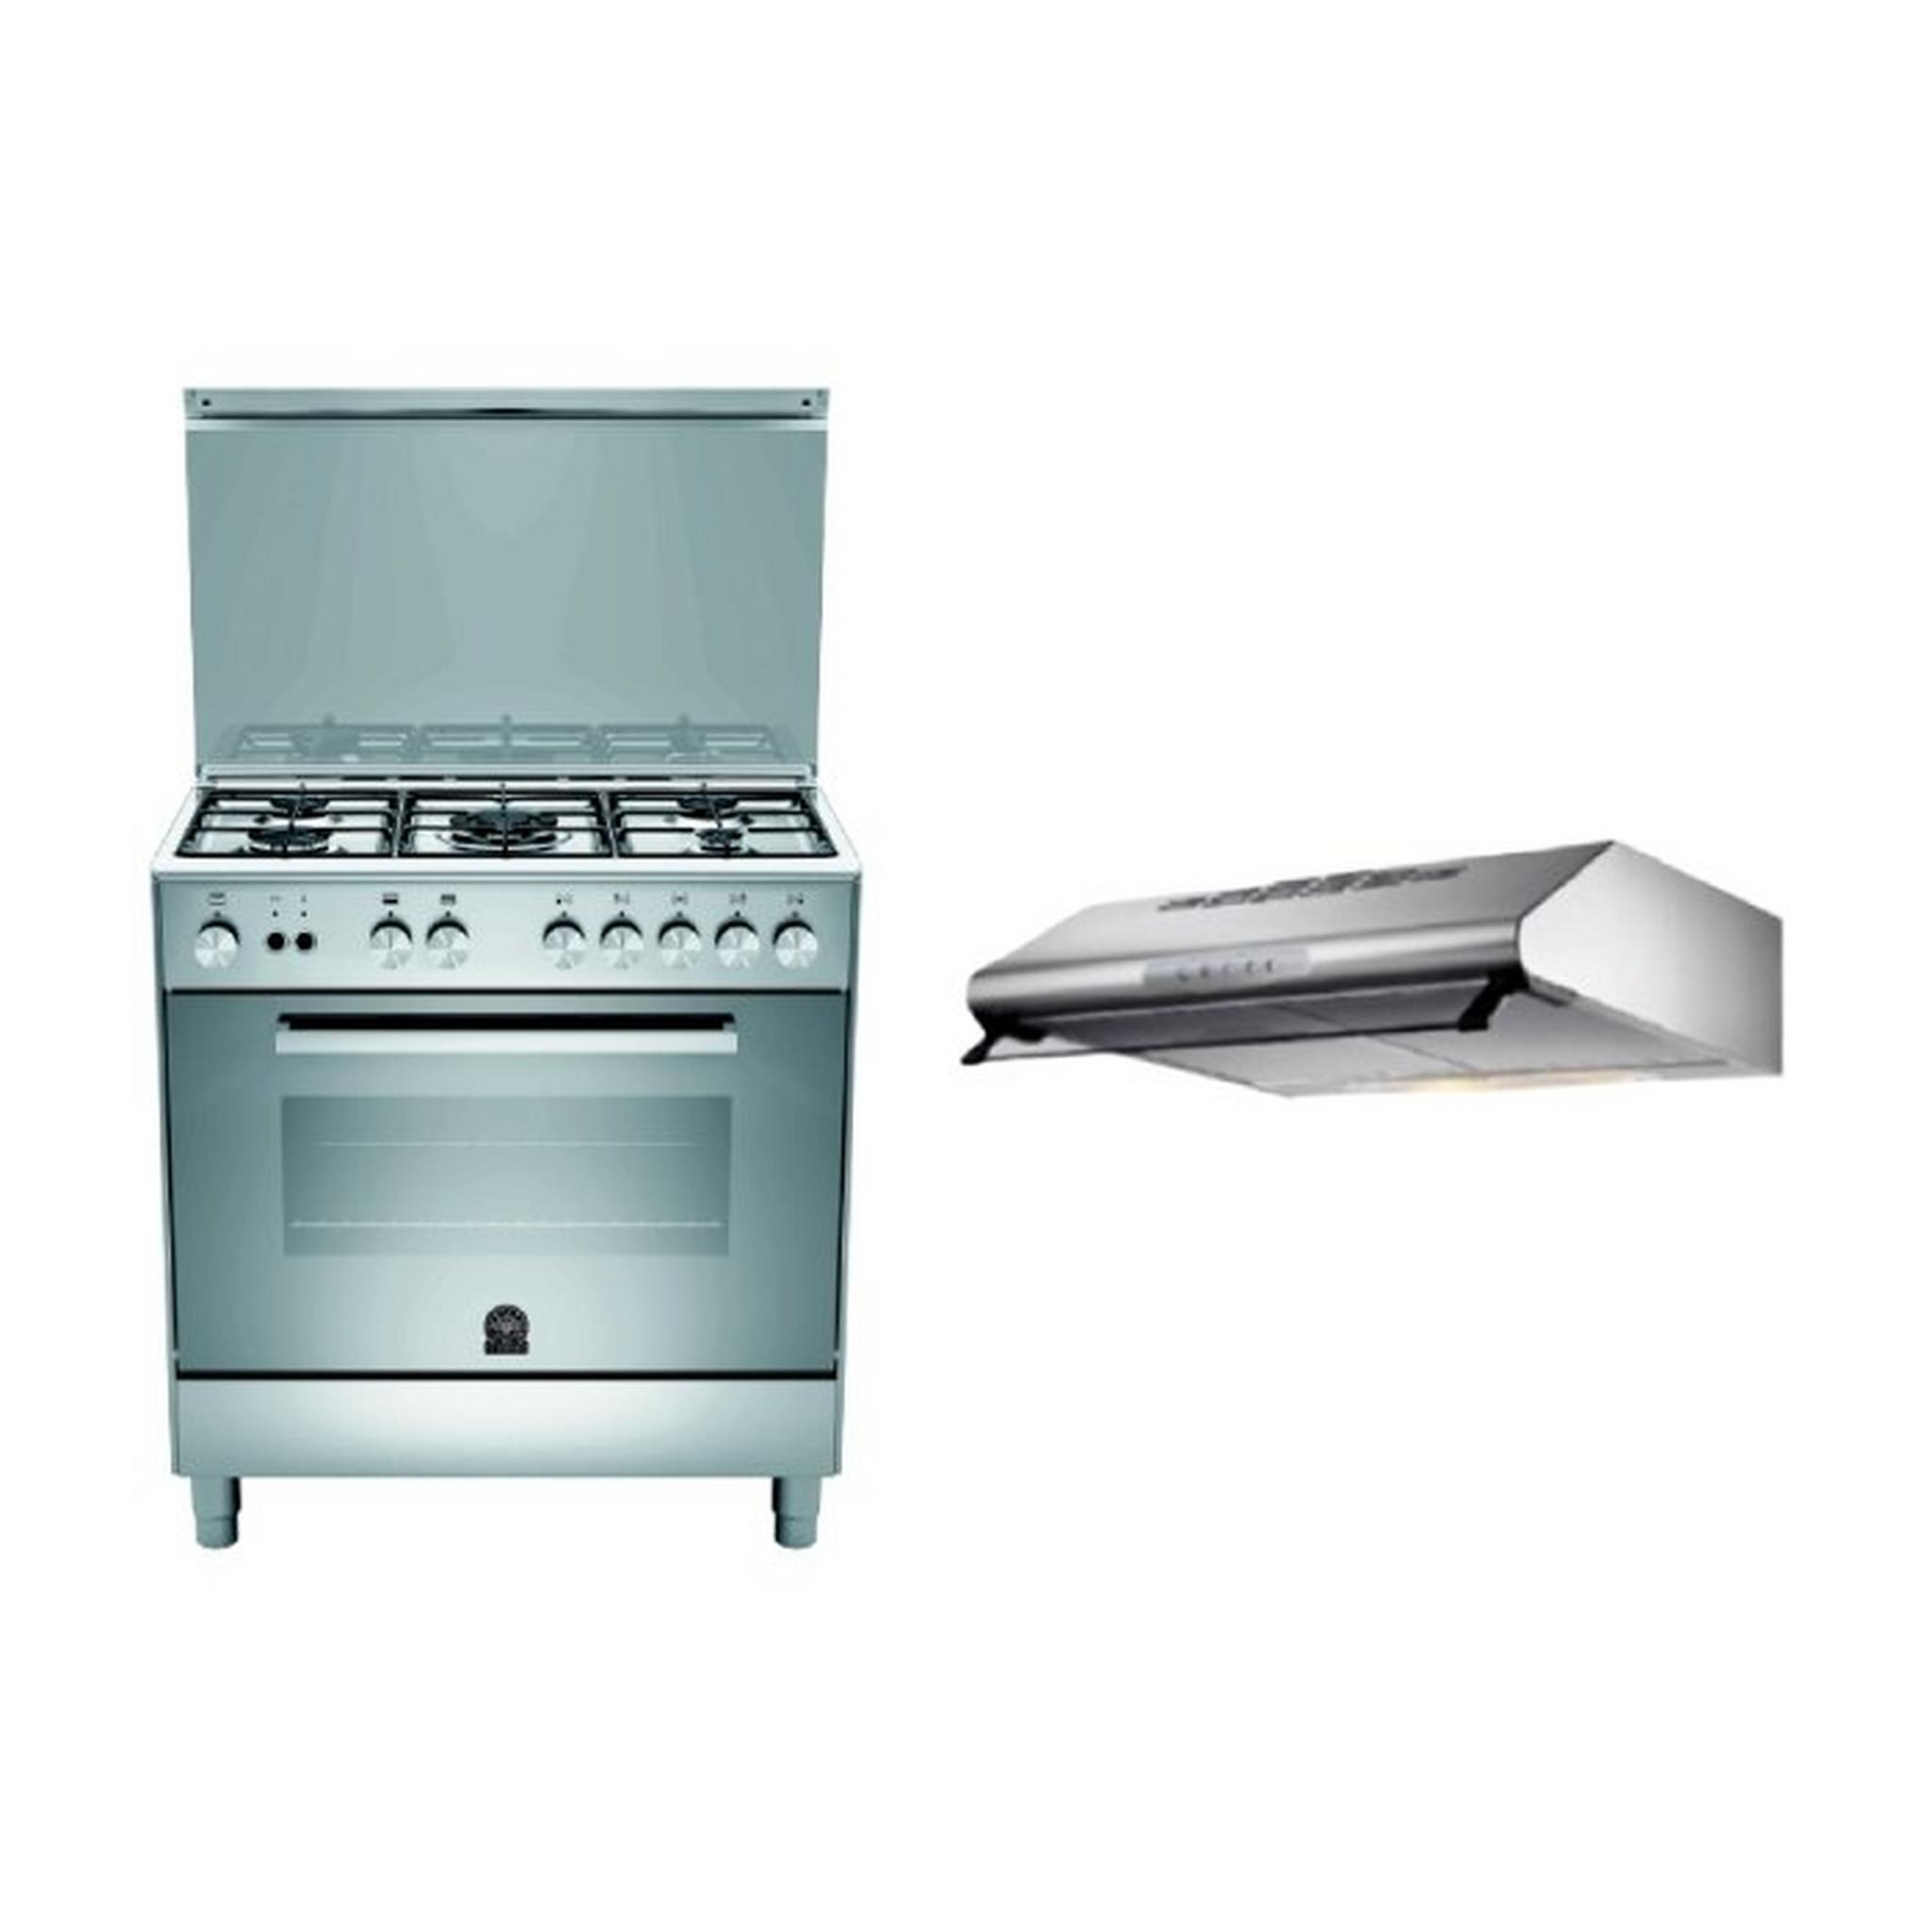 Lagermania 80x50 cm 5-Burner Floor Standing Gas Cooker (TU85C30DX) + Lagermania 80cm Under-Cabinet Cooker Hood